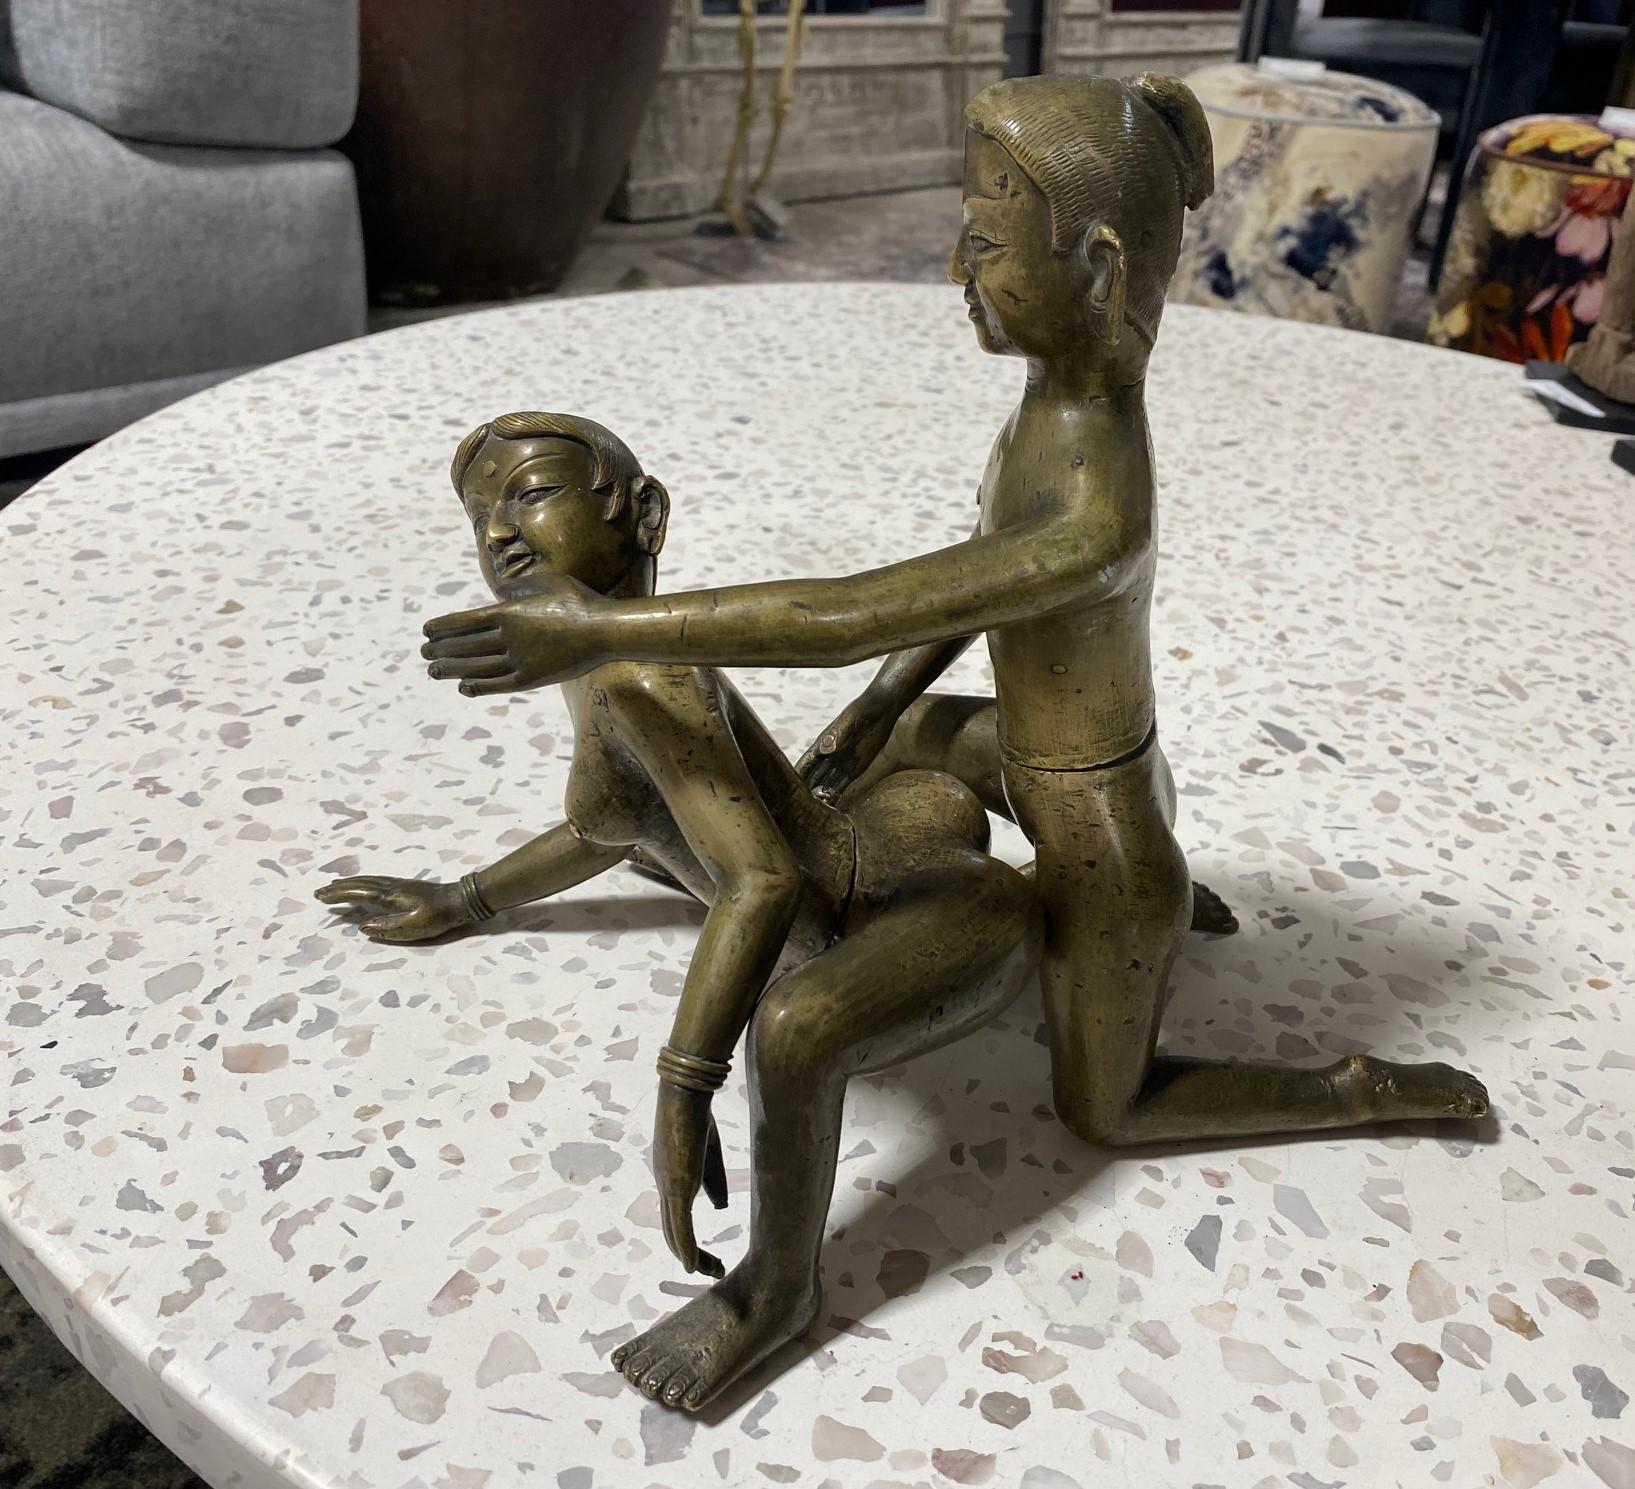 Skulptur Kama Sutra-Figuren aus schwerer Bronze, Indien, Südostasiatisch, erotisch, Kama Sutra im Angebot 9